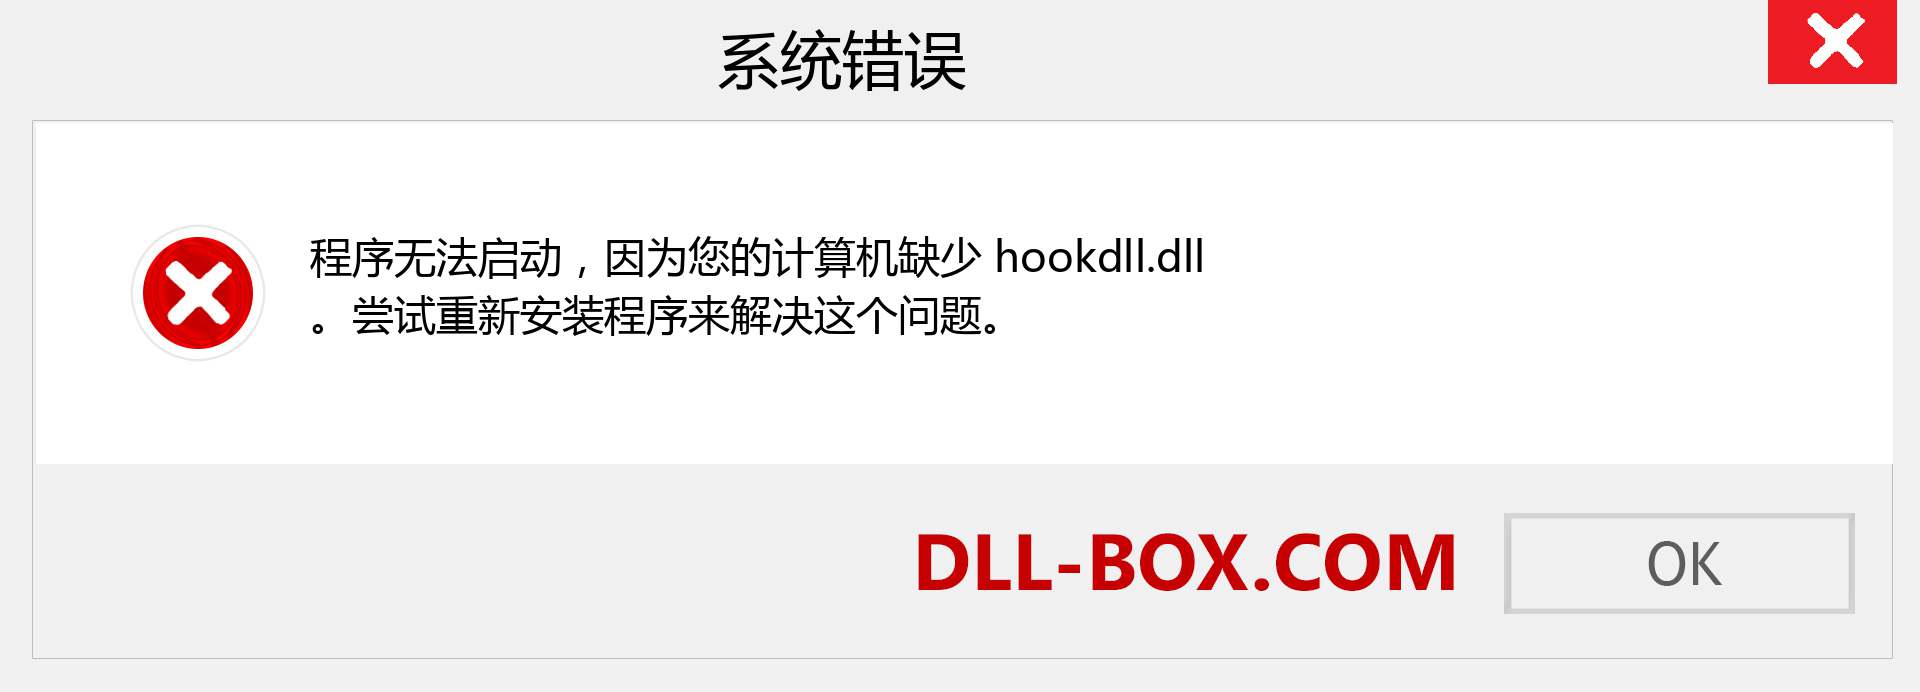 hookdll.dll 文件丢失？。 适用于 Windows 7、8、10 的下载 - 修复 Windows、照片、图像上的 hookdll dll 丢失错误